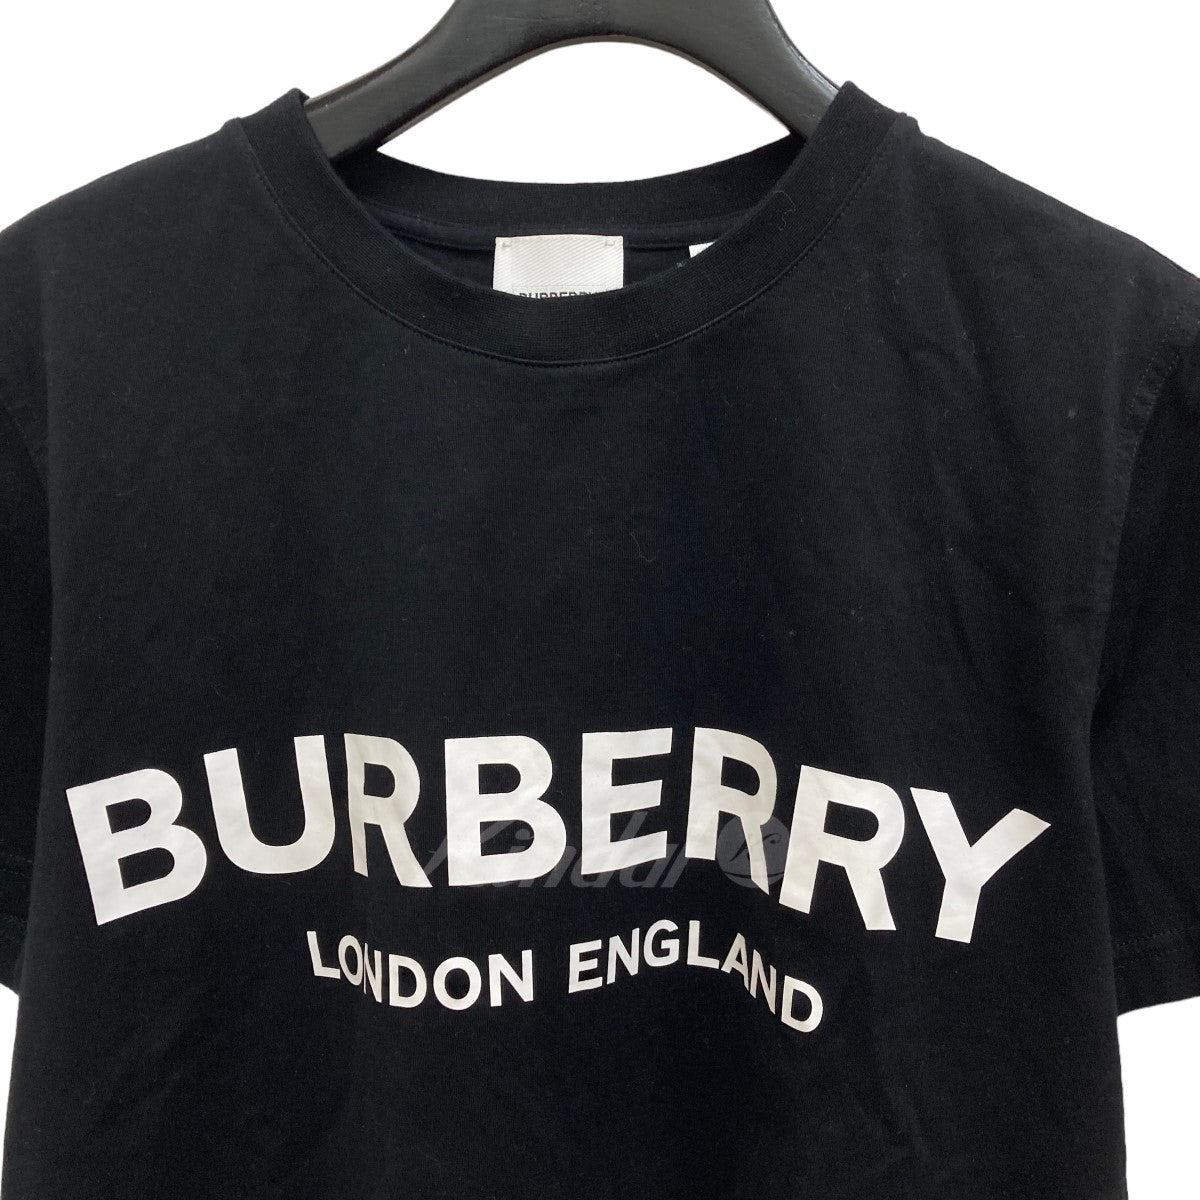 BURBERRY(バーバリー) 半袖Tシャツ 8011651 8011651 ブラック サイズ S 